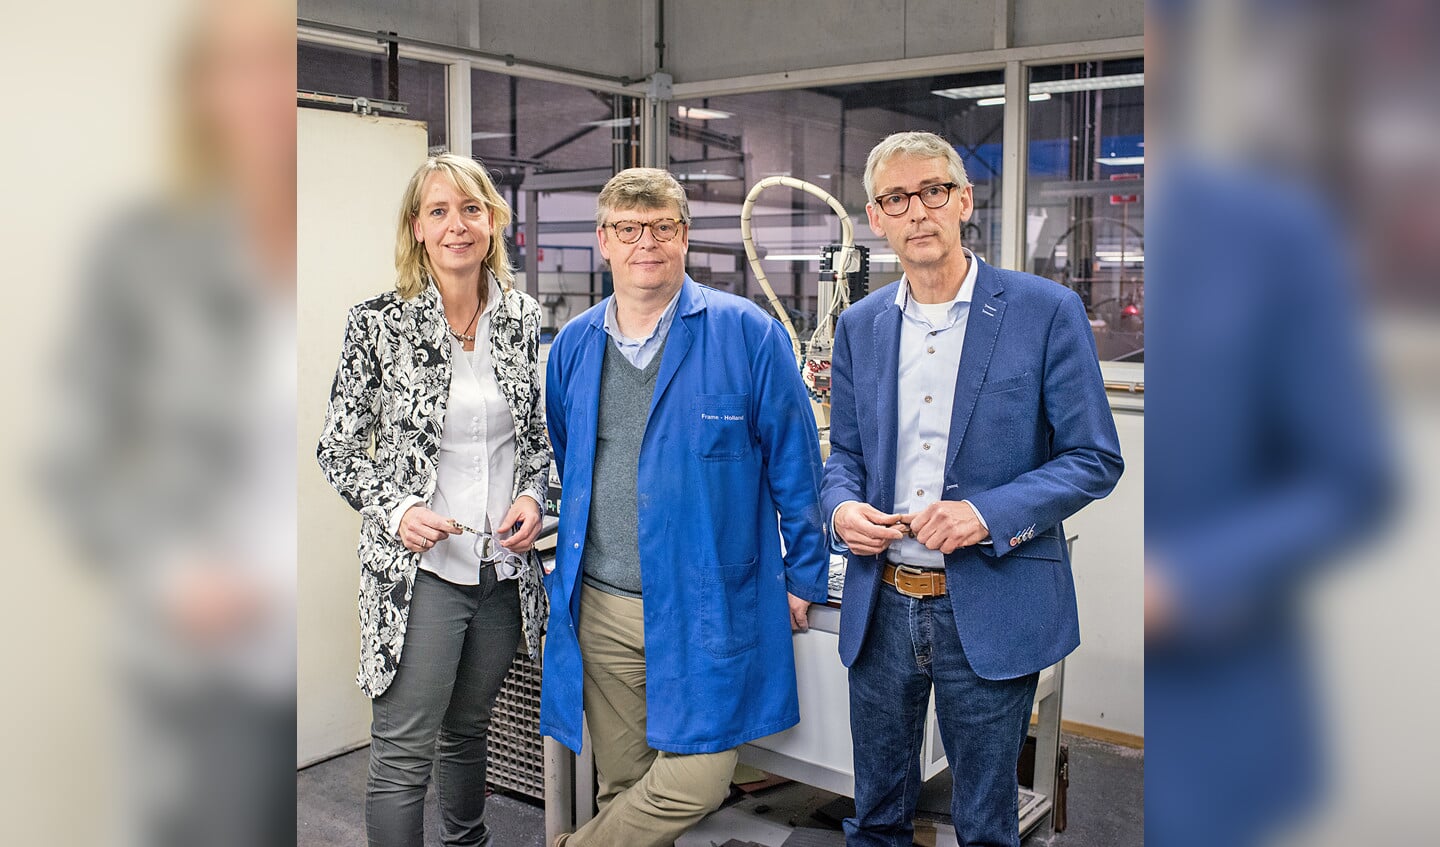 De directie van Frame Holland: Saskia, Hans en Menno Borsboom.